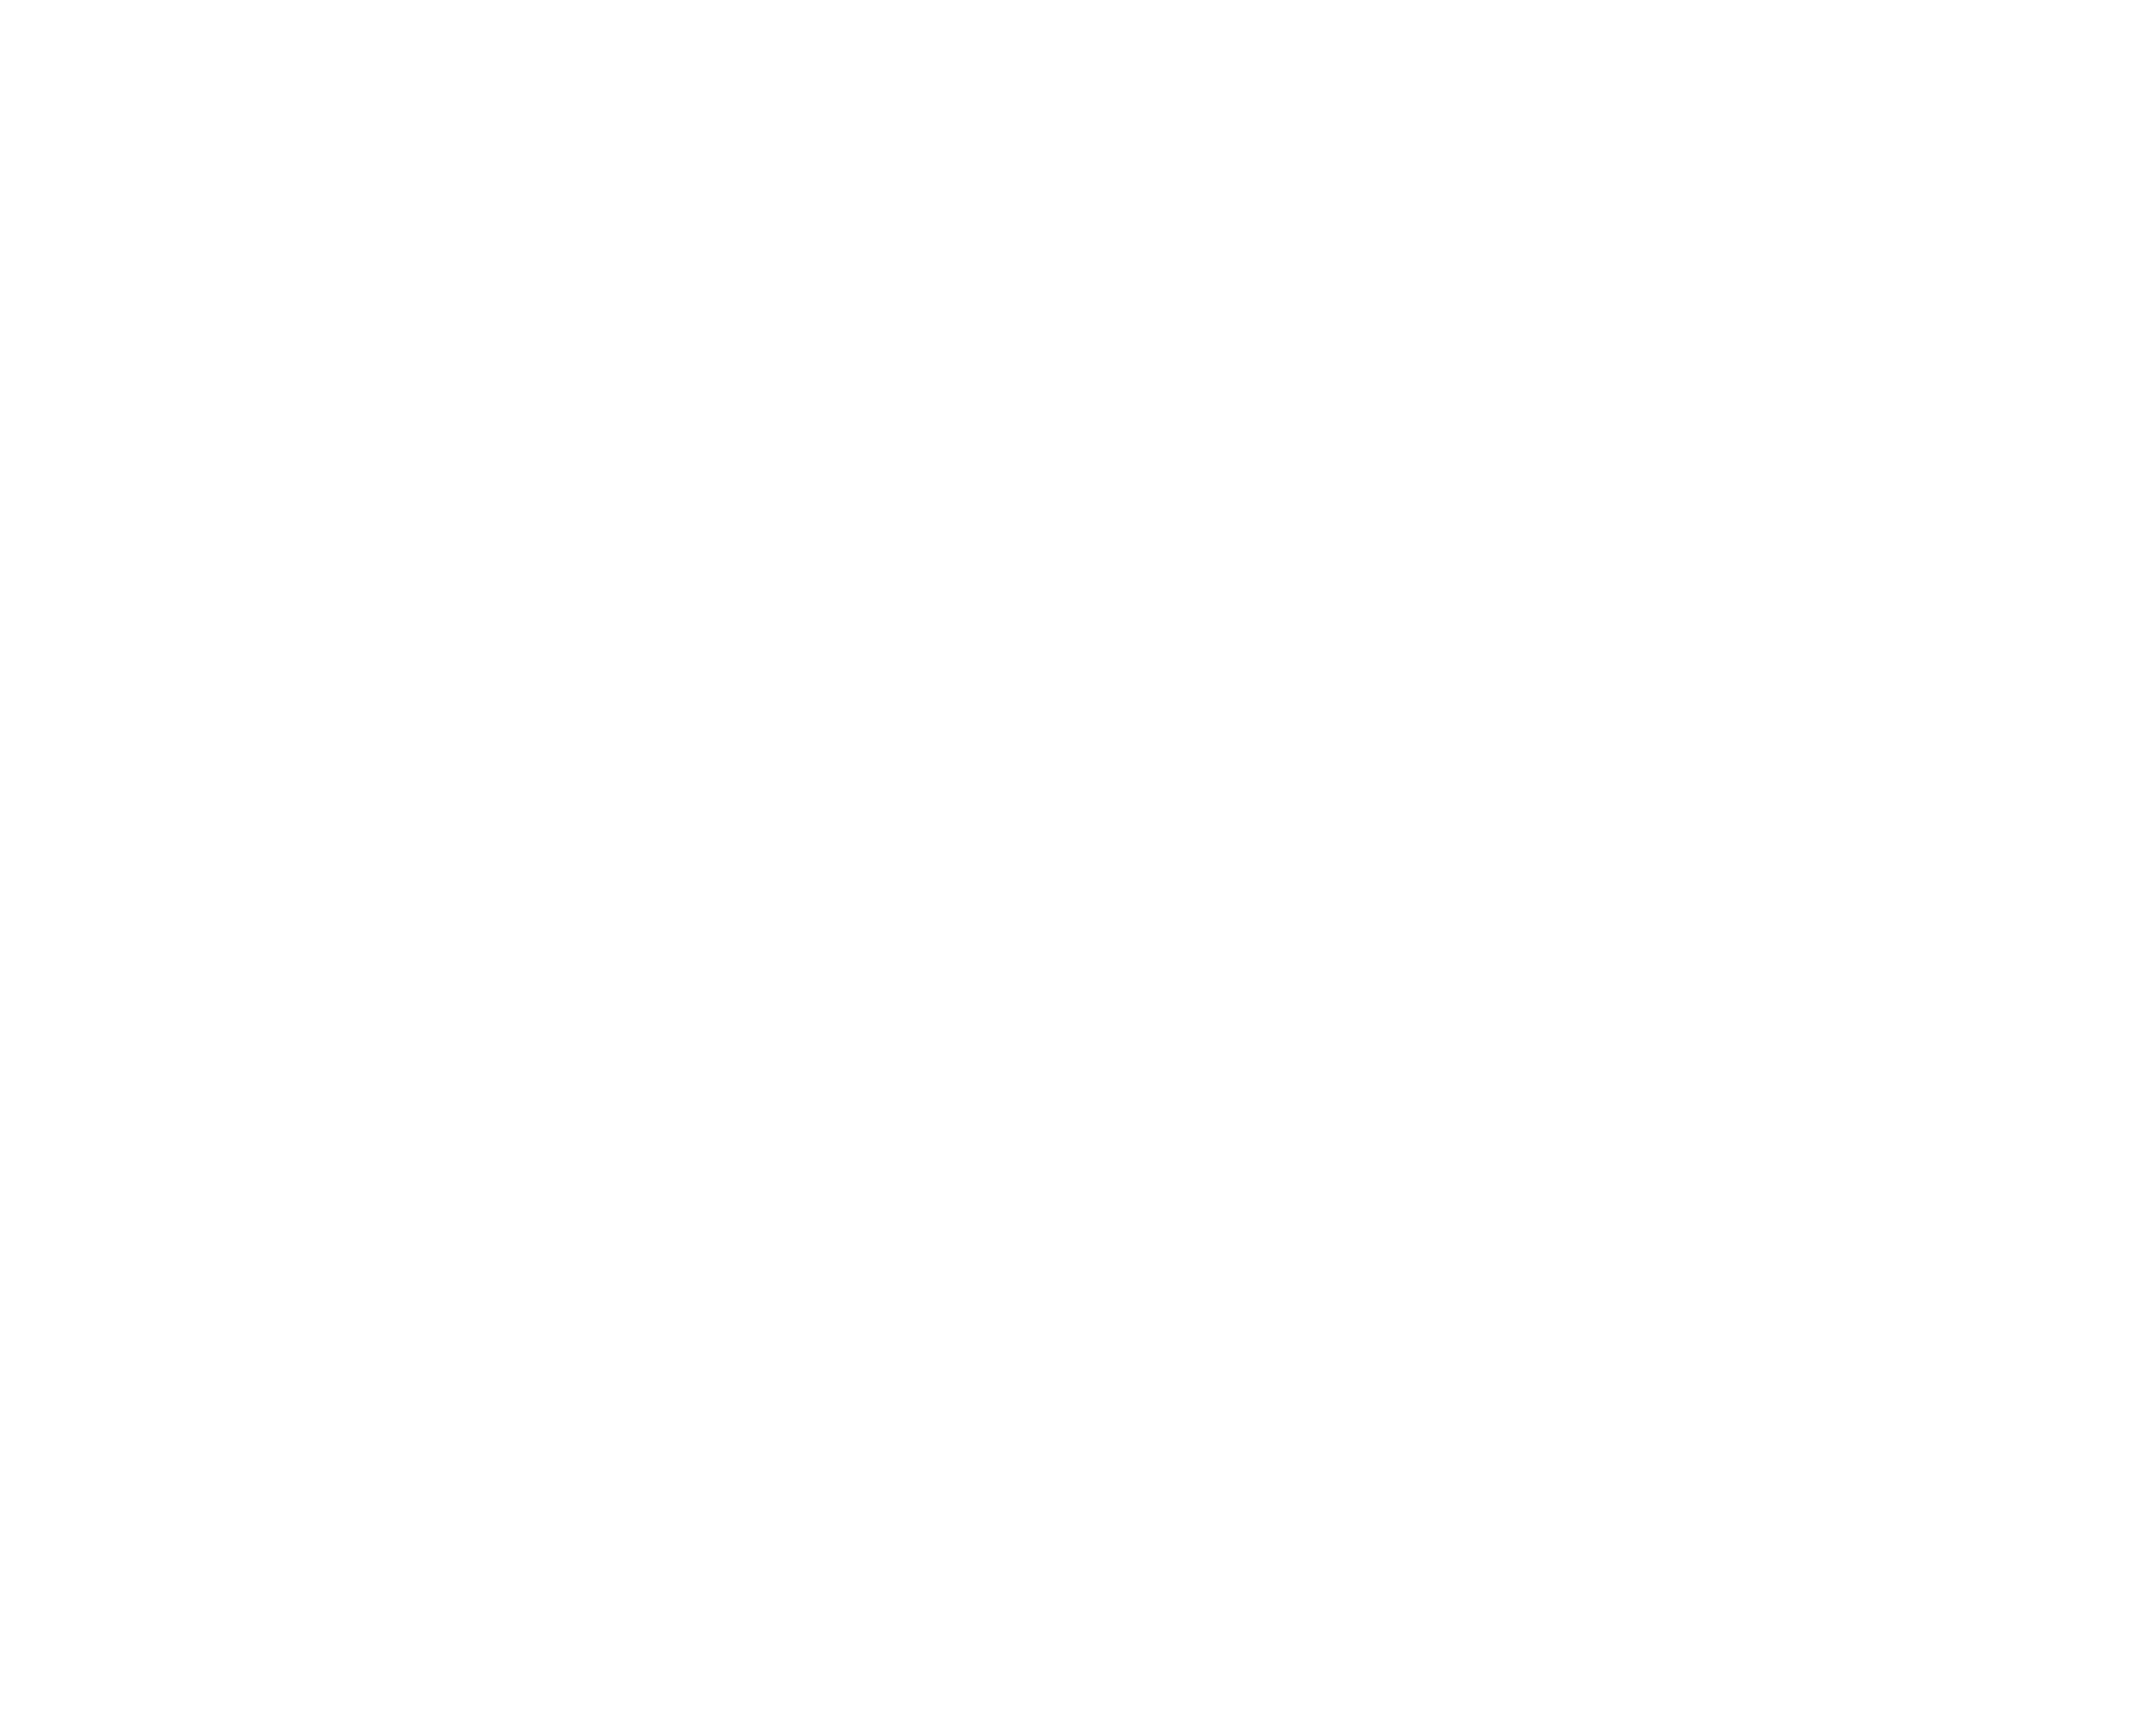 carlsberg group